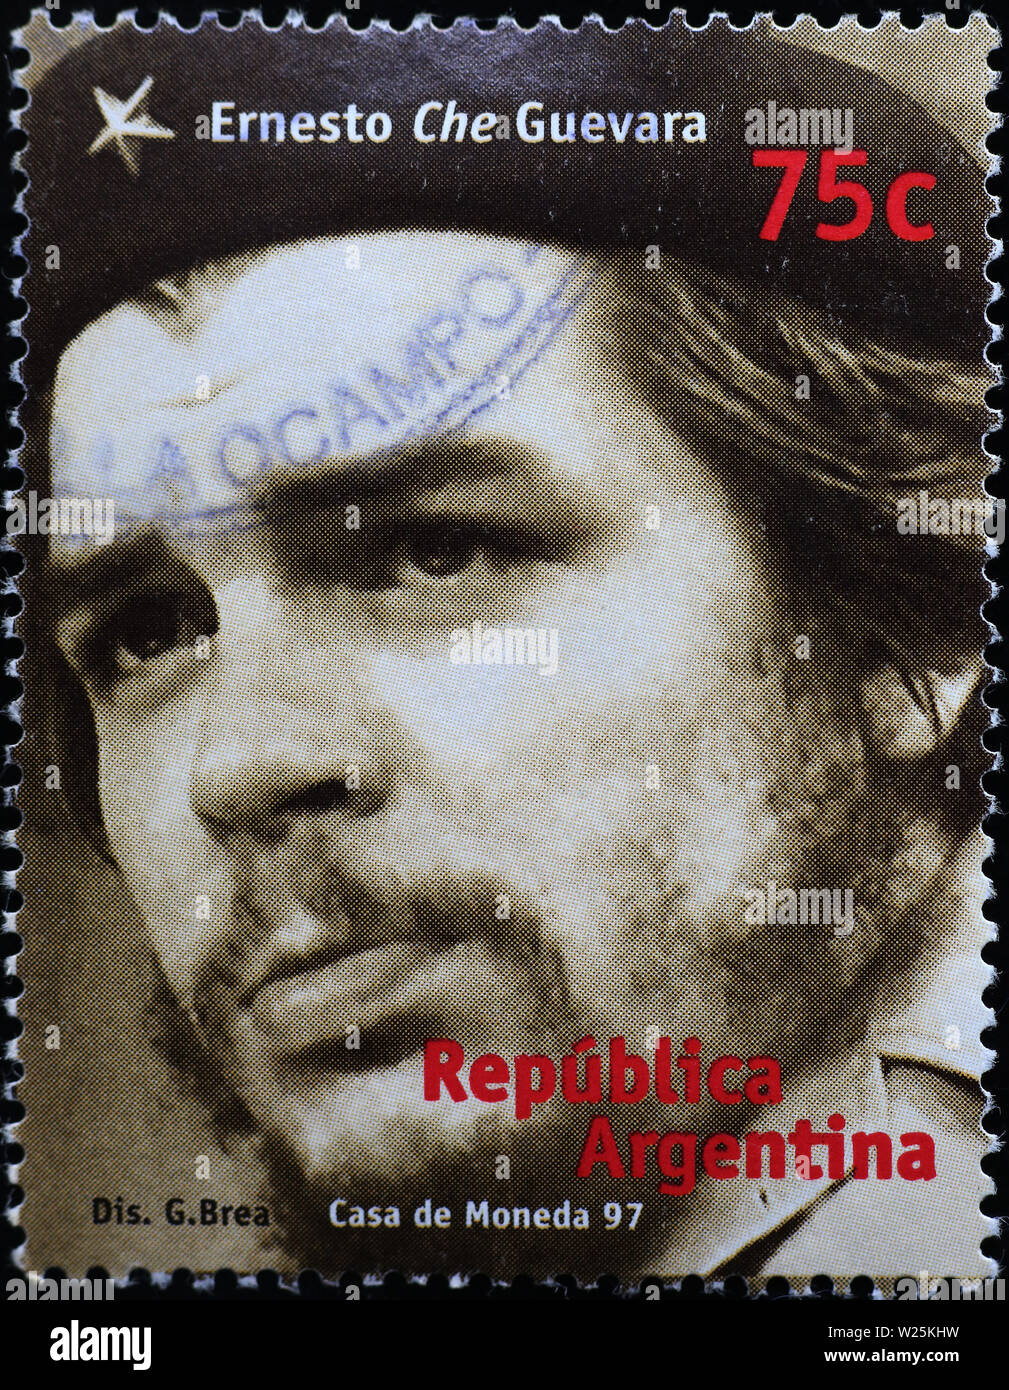 Ernesto Che Guevara portrait on stamp of Argentina Stock Photo